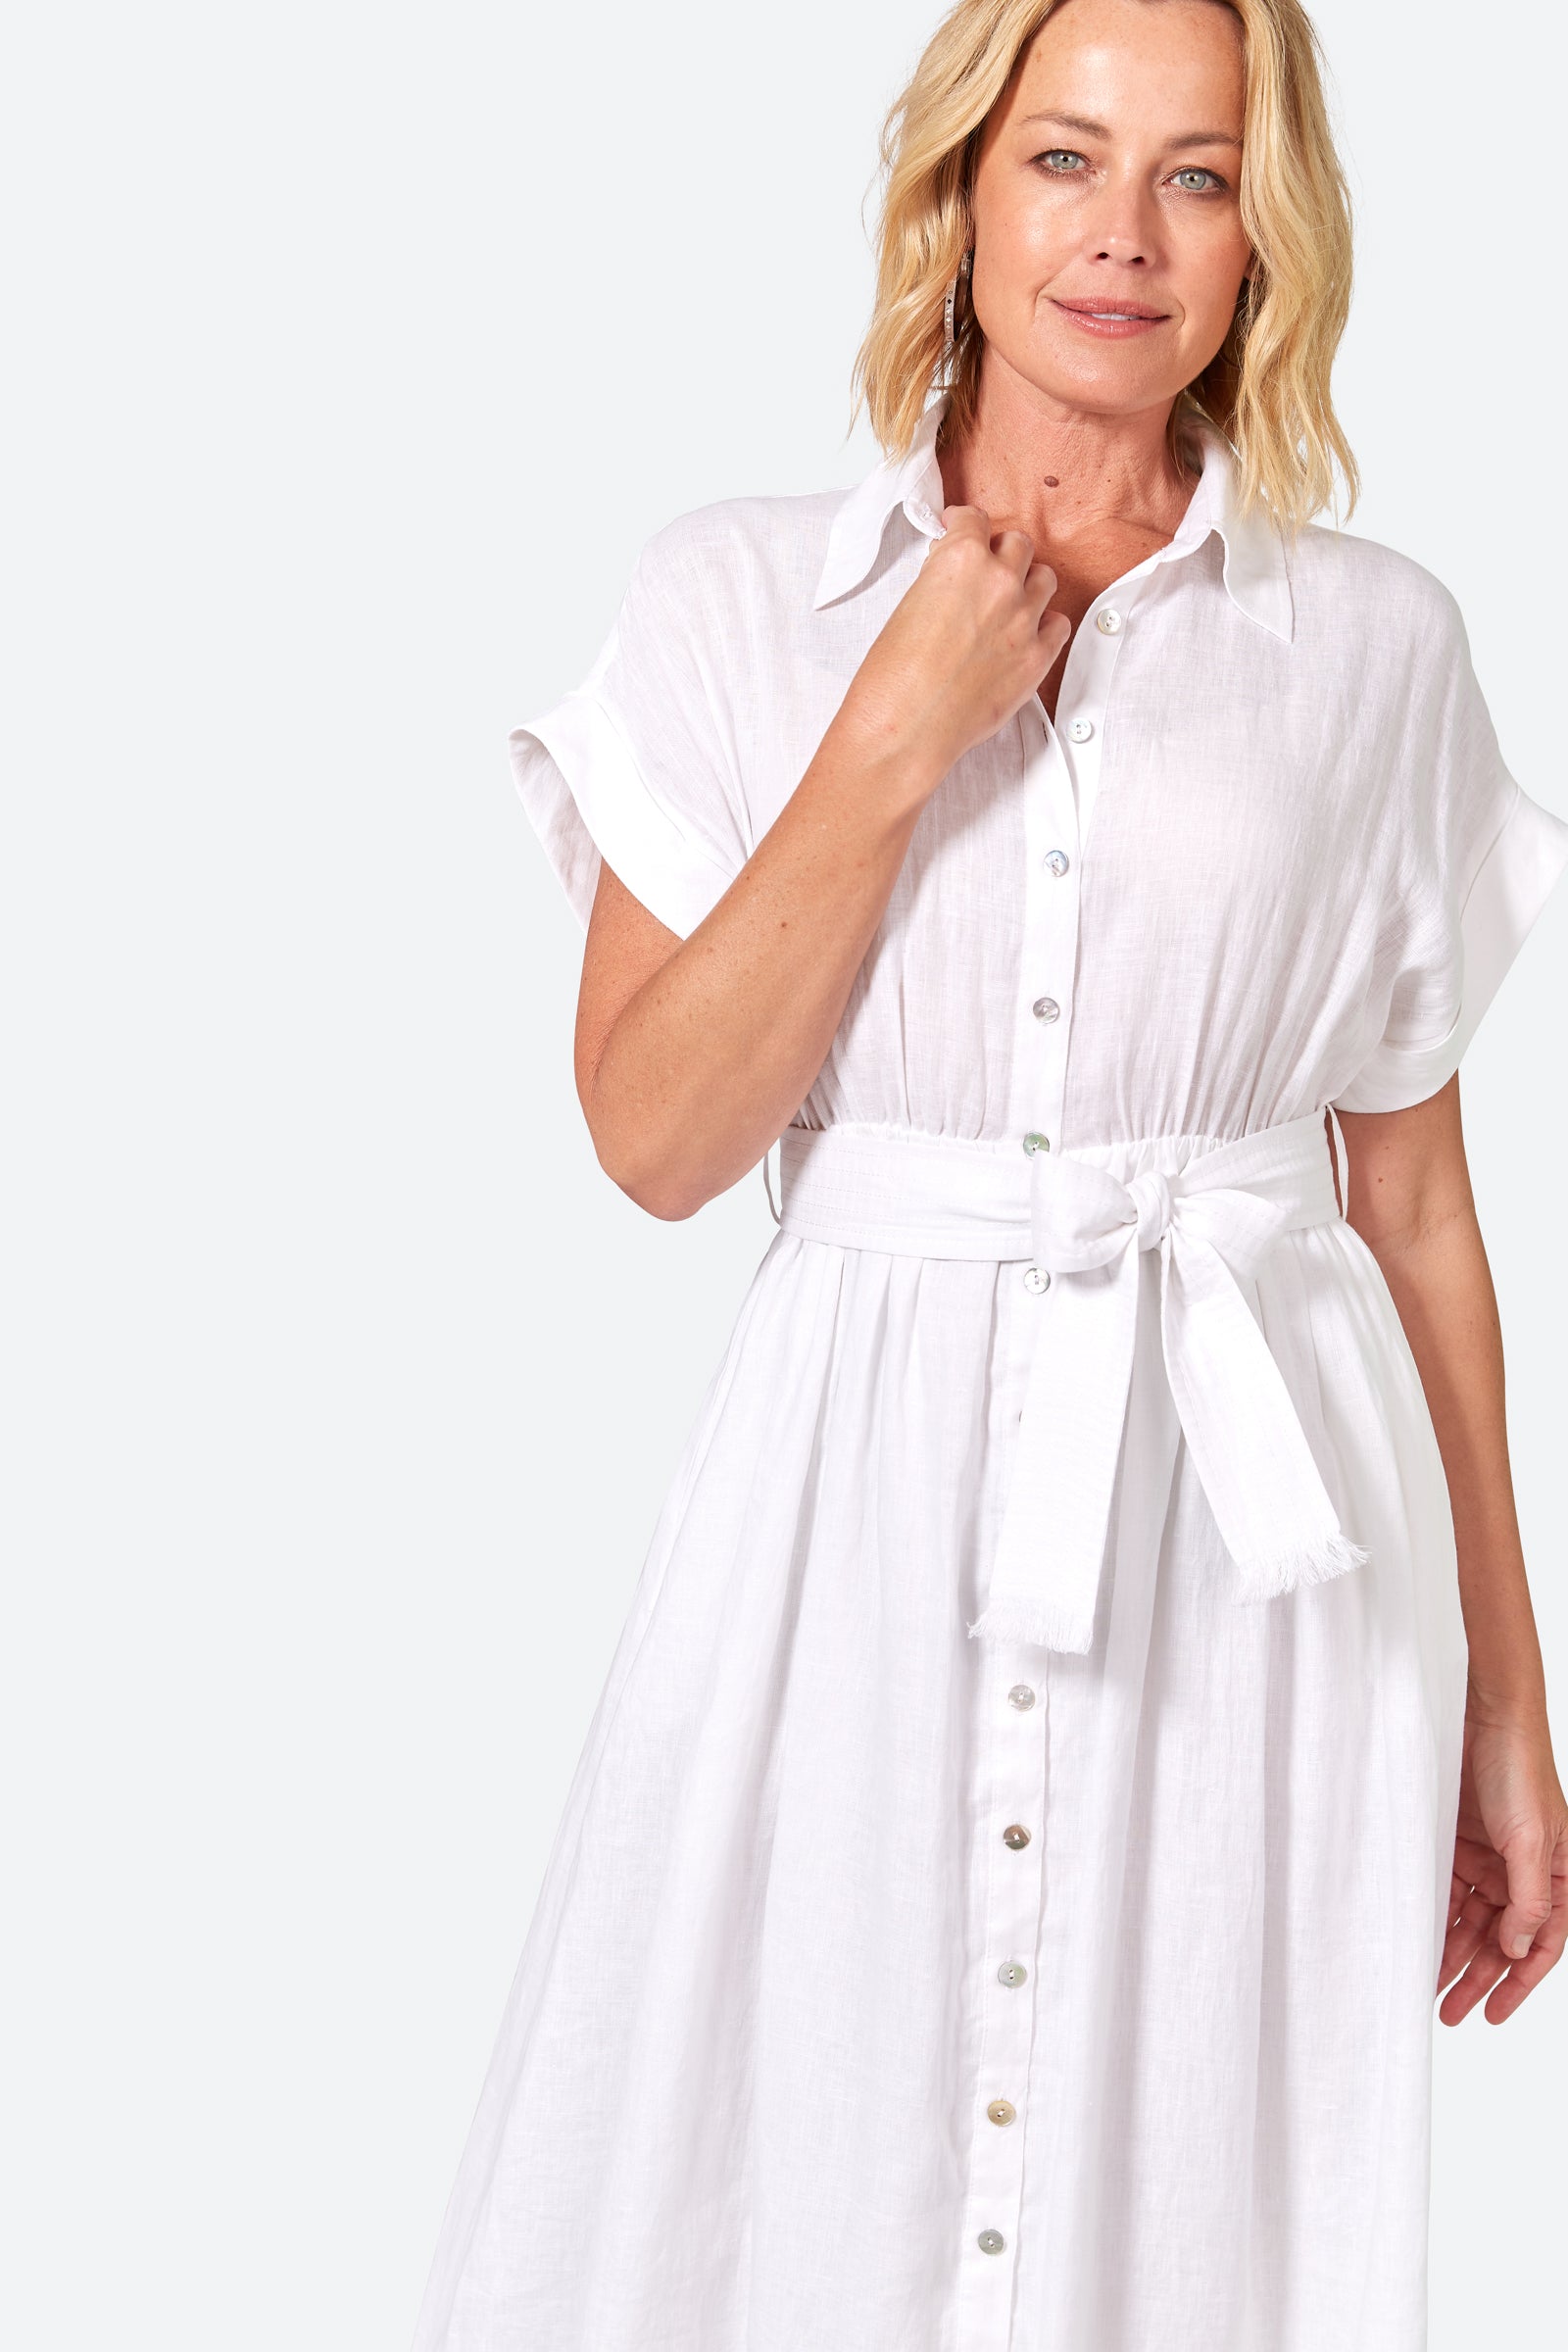 La Vie Shirt Dress - Blanc - eb&ive Clothing - Shirt Dress Maxi Linen